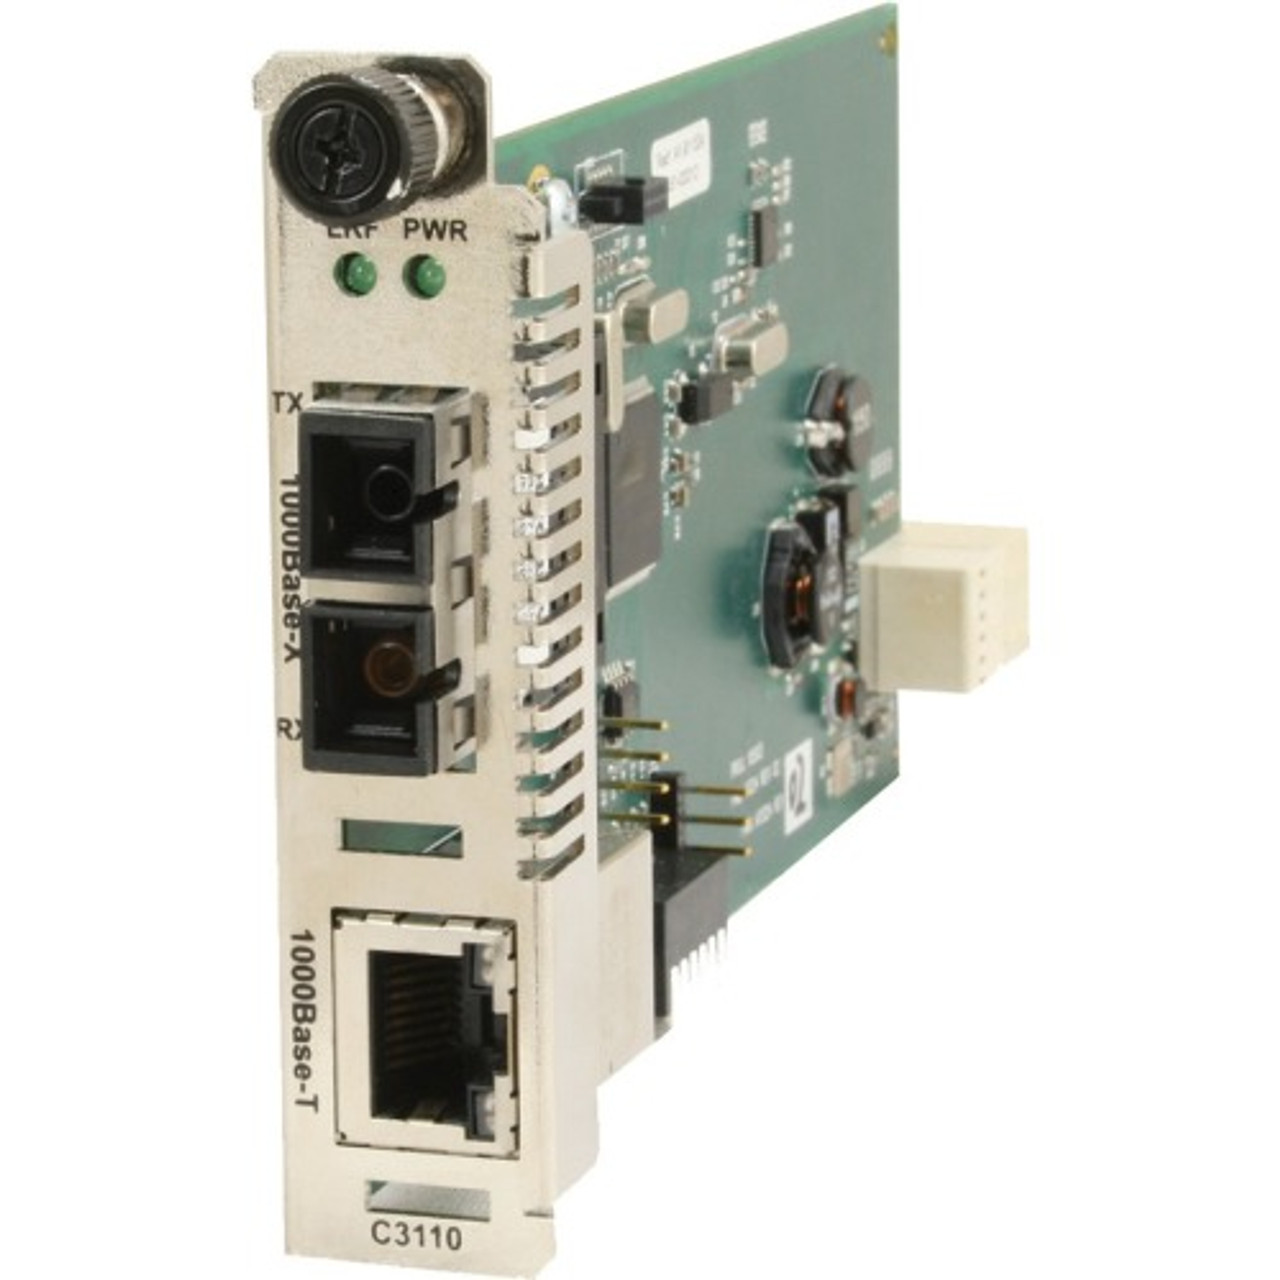 C3110-1039 Transition Networks Gigabit Ethernet Media Converter Module 1000Base-T to 1000Base-SX/LX Network (RJ-45) 1 x LC Ports Multi-mode Gigabit Ethernet